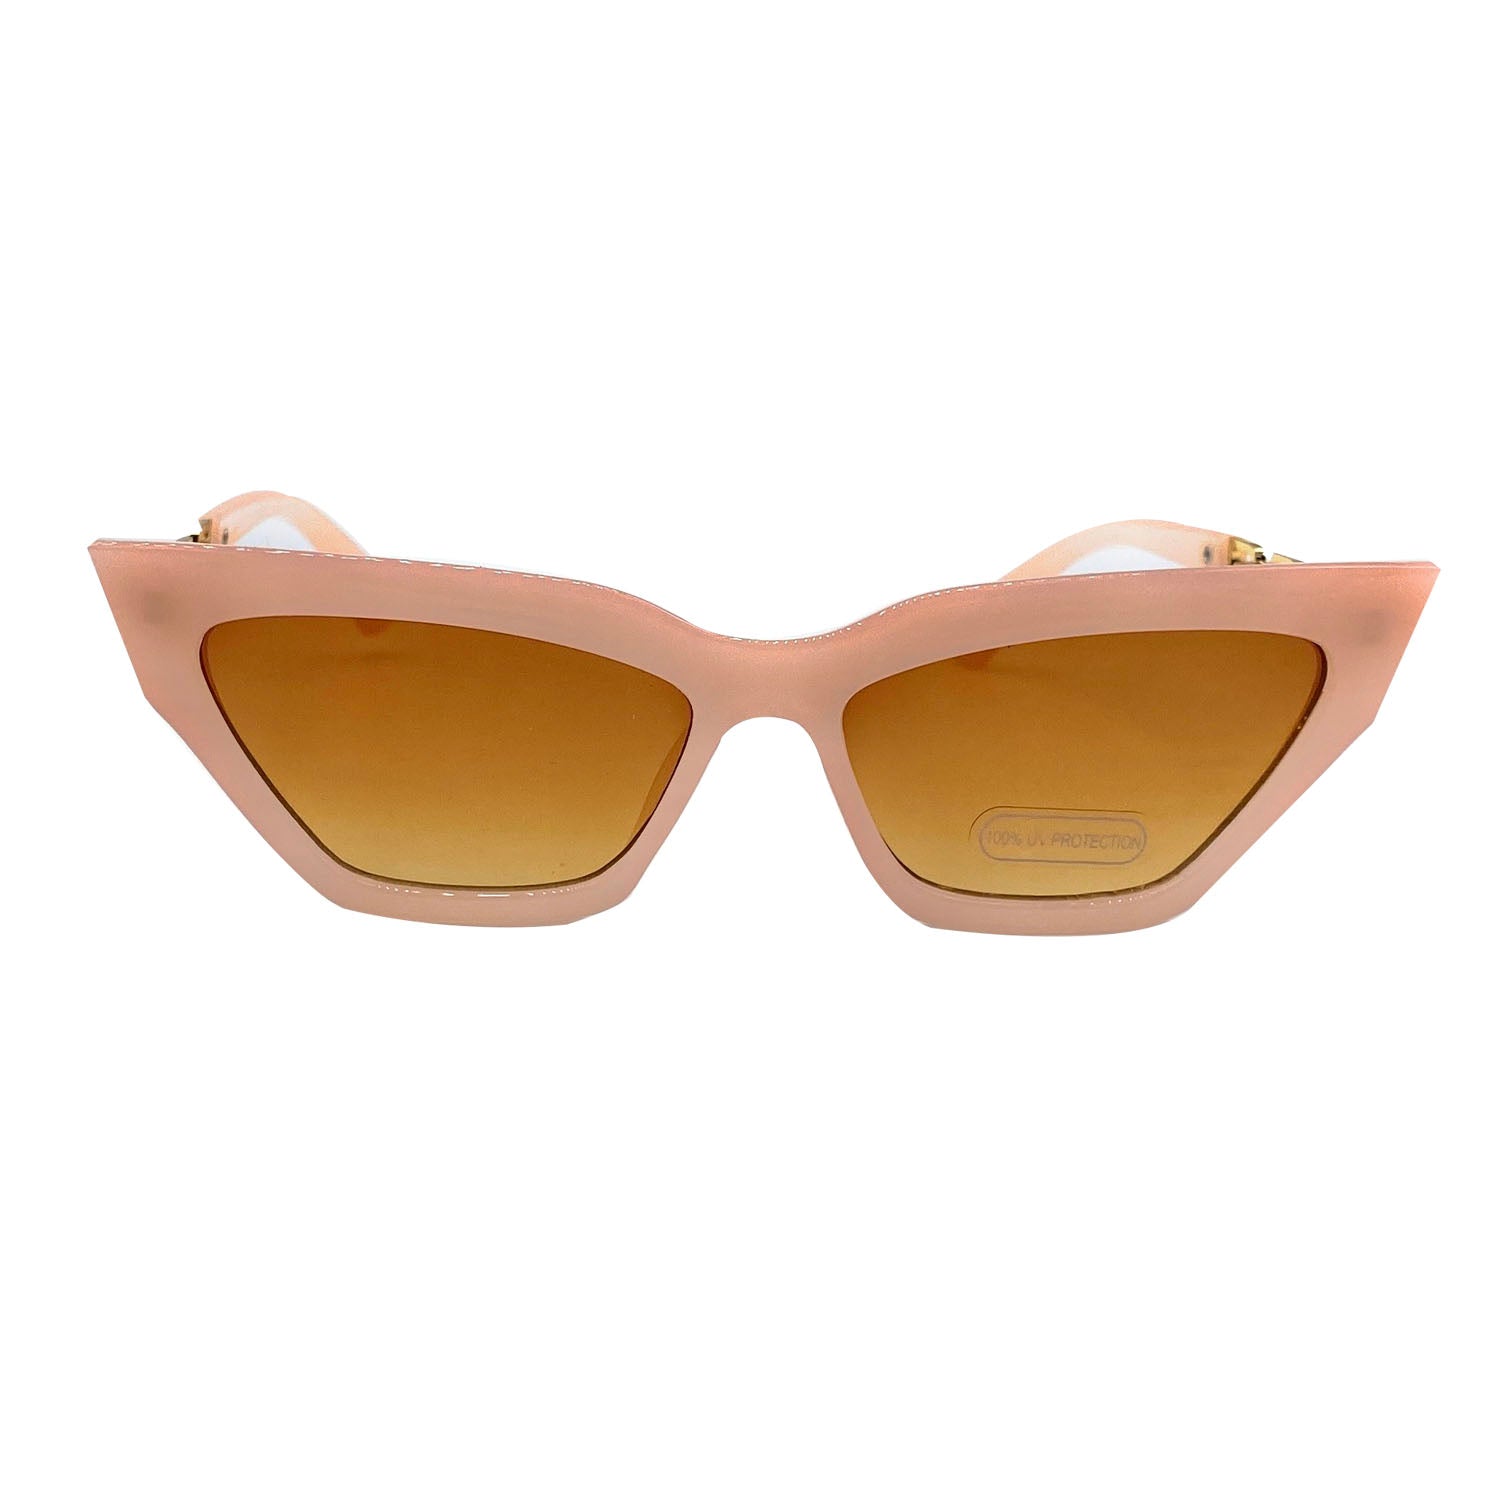 Empire Cove Retro Vintage Cat Eye Sunglasses Trendy Stylish Shades UV Protection
